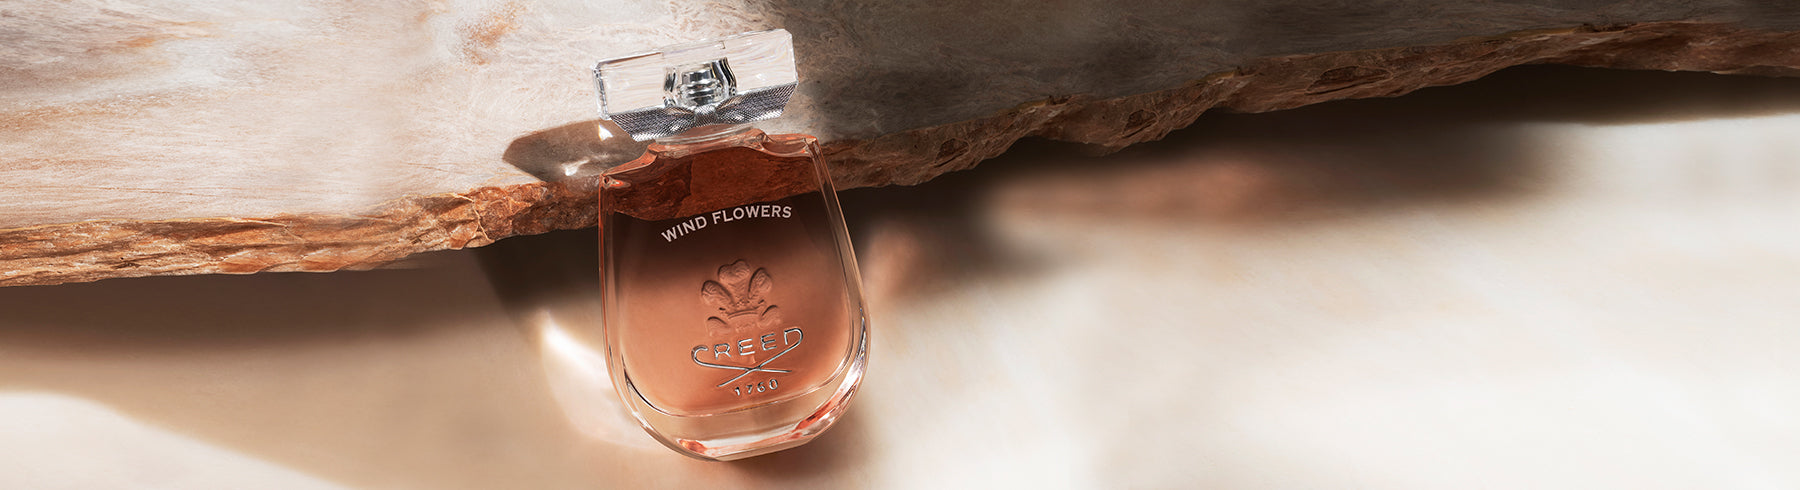 Creed Wind Flowers Women's EDP Perfume 75ml